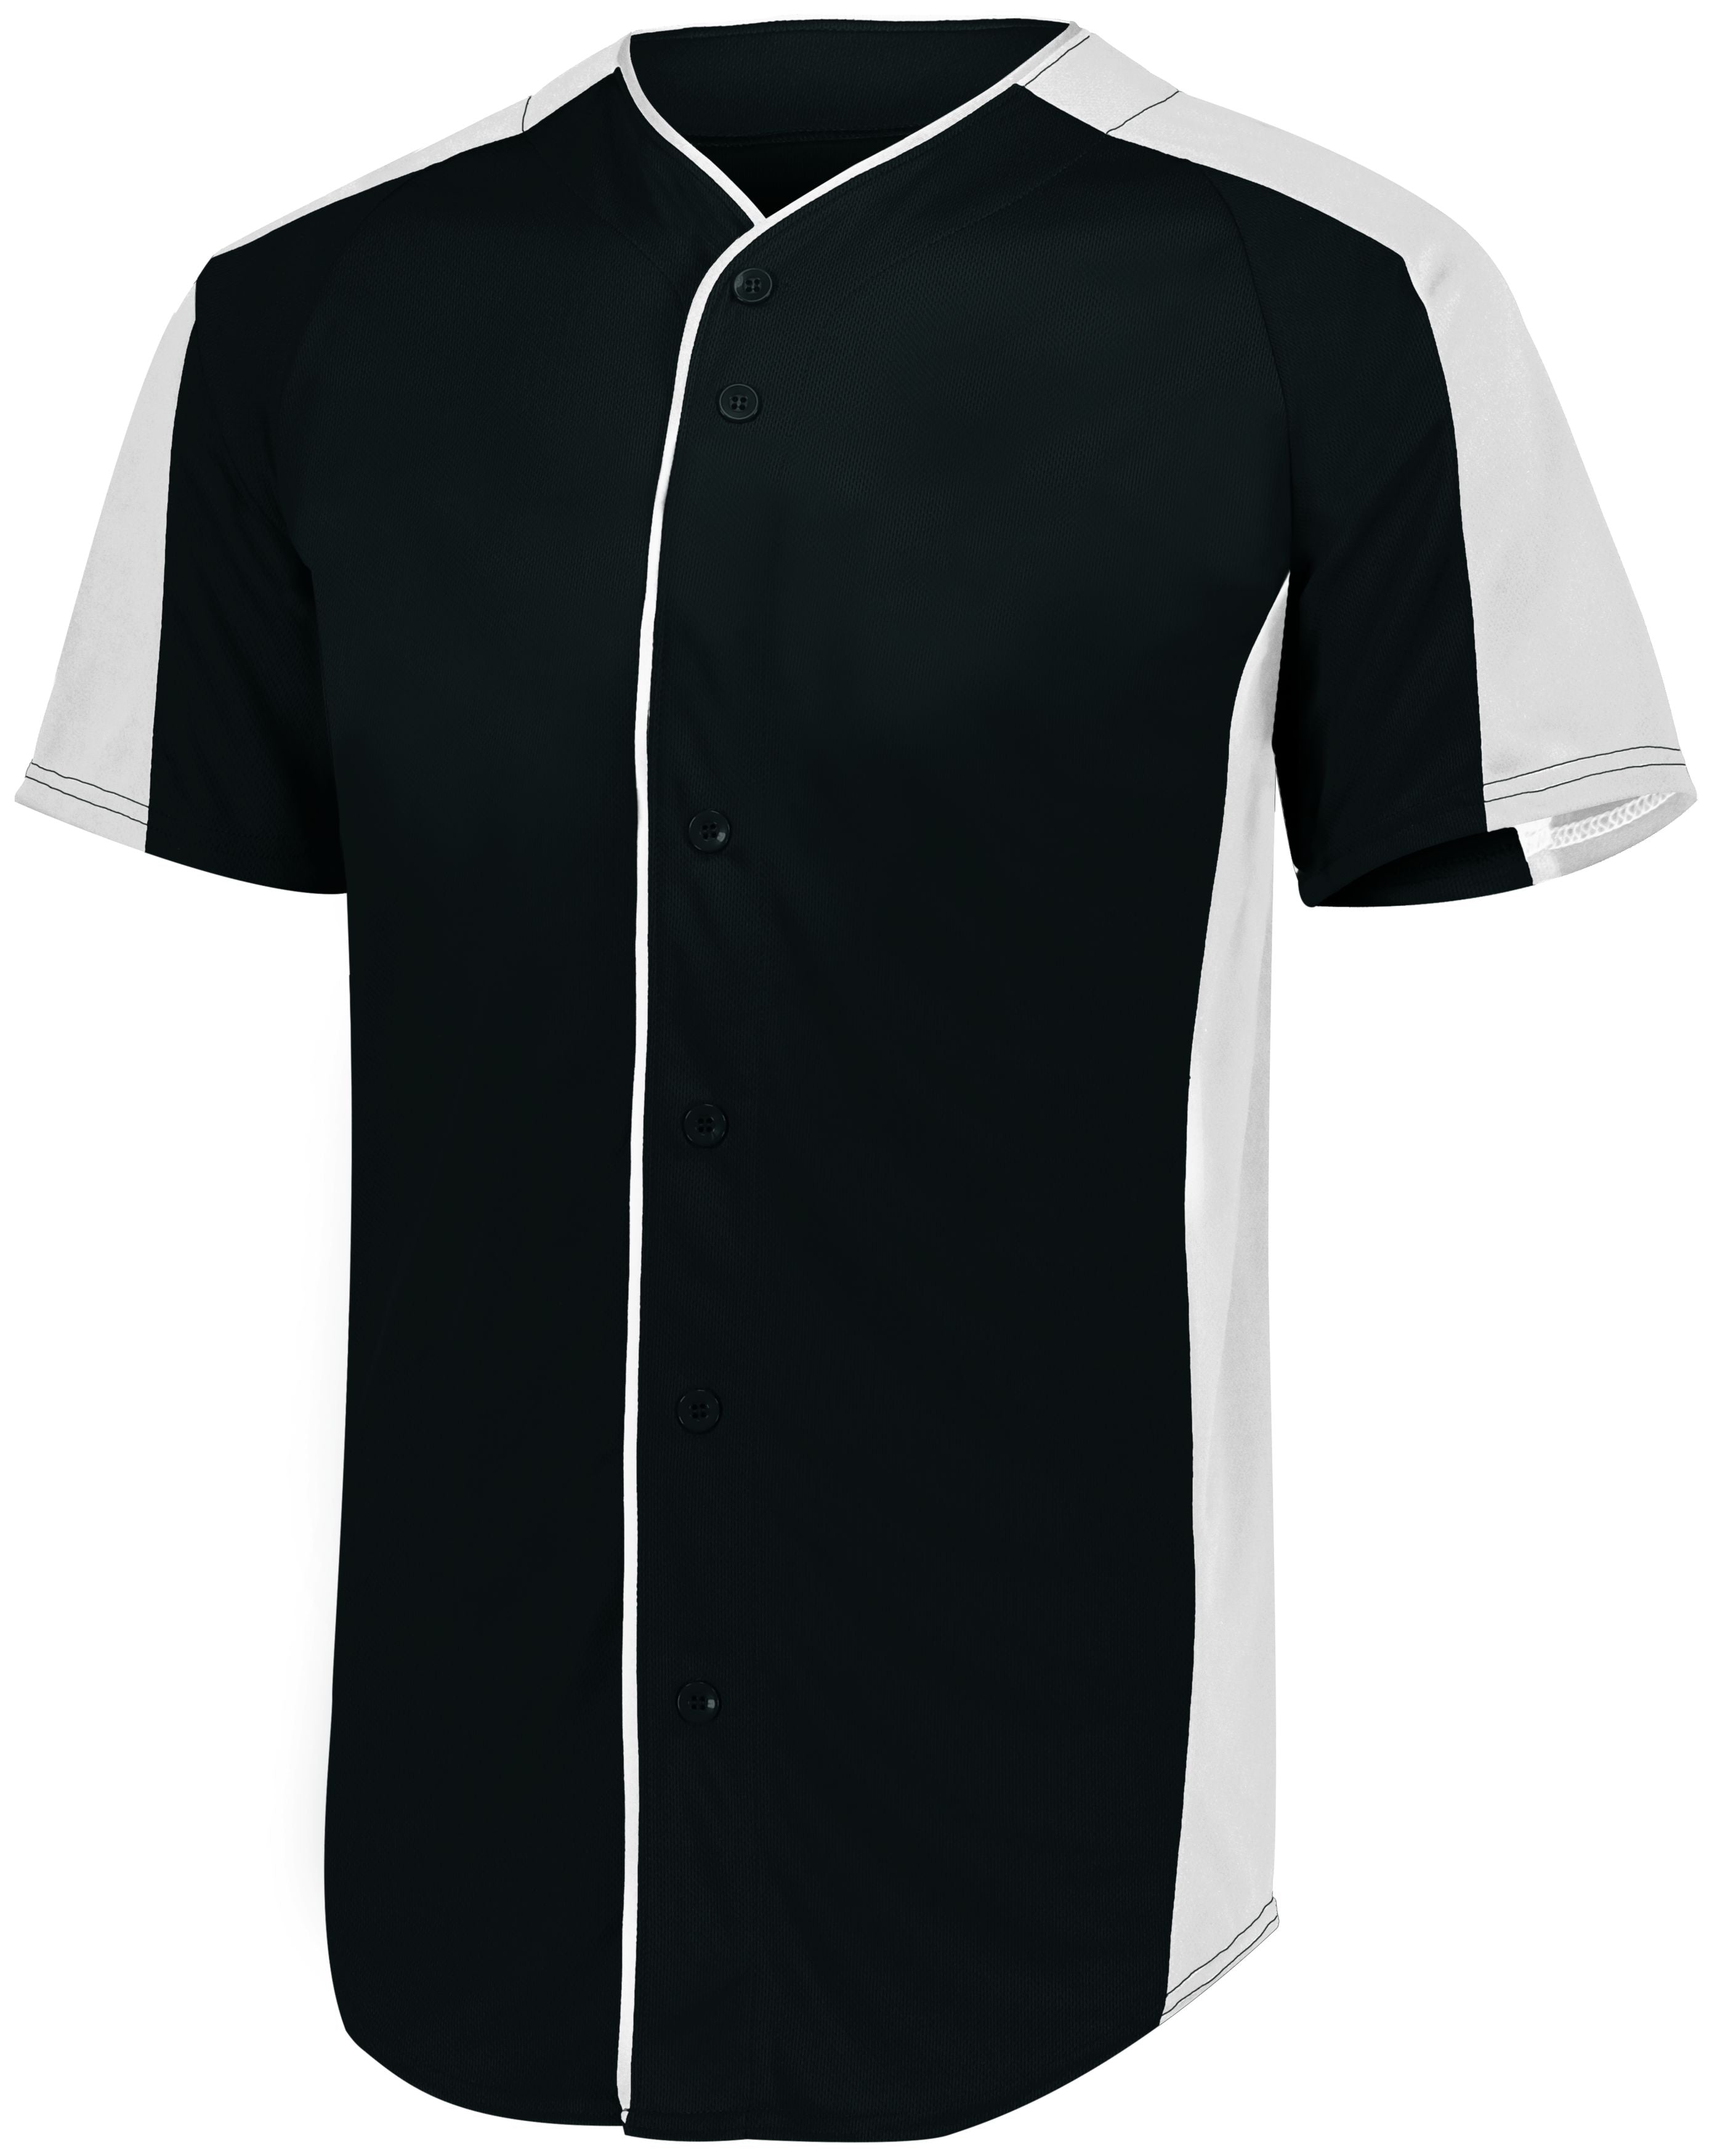 Full-Button Baseball Jersey from Augusta Sportswear